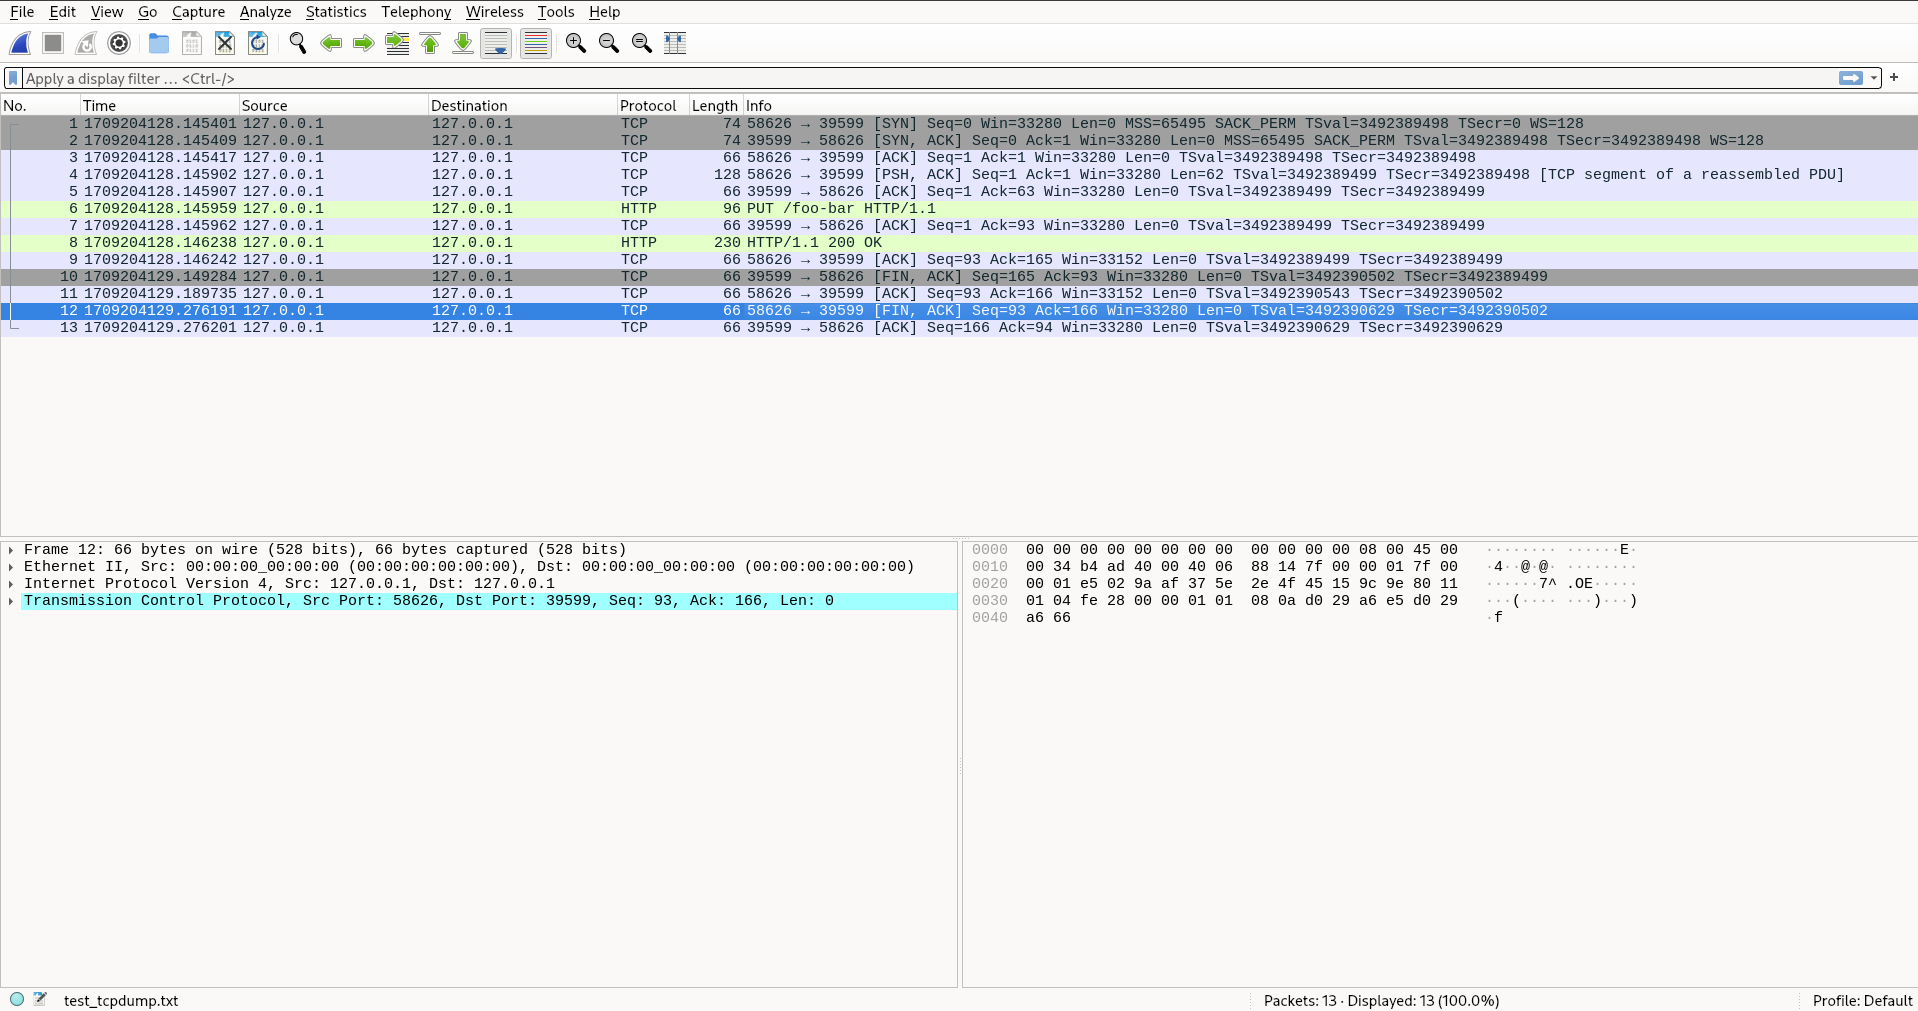 Eventlet pcap file loaded in Wireshark